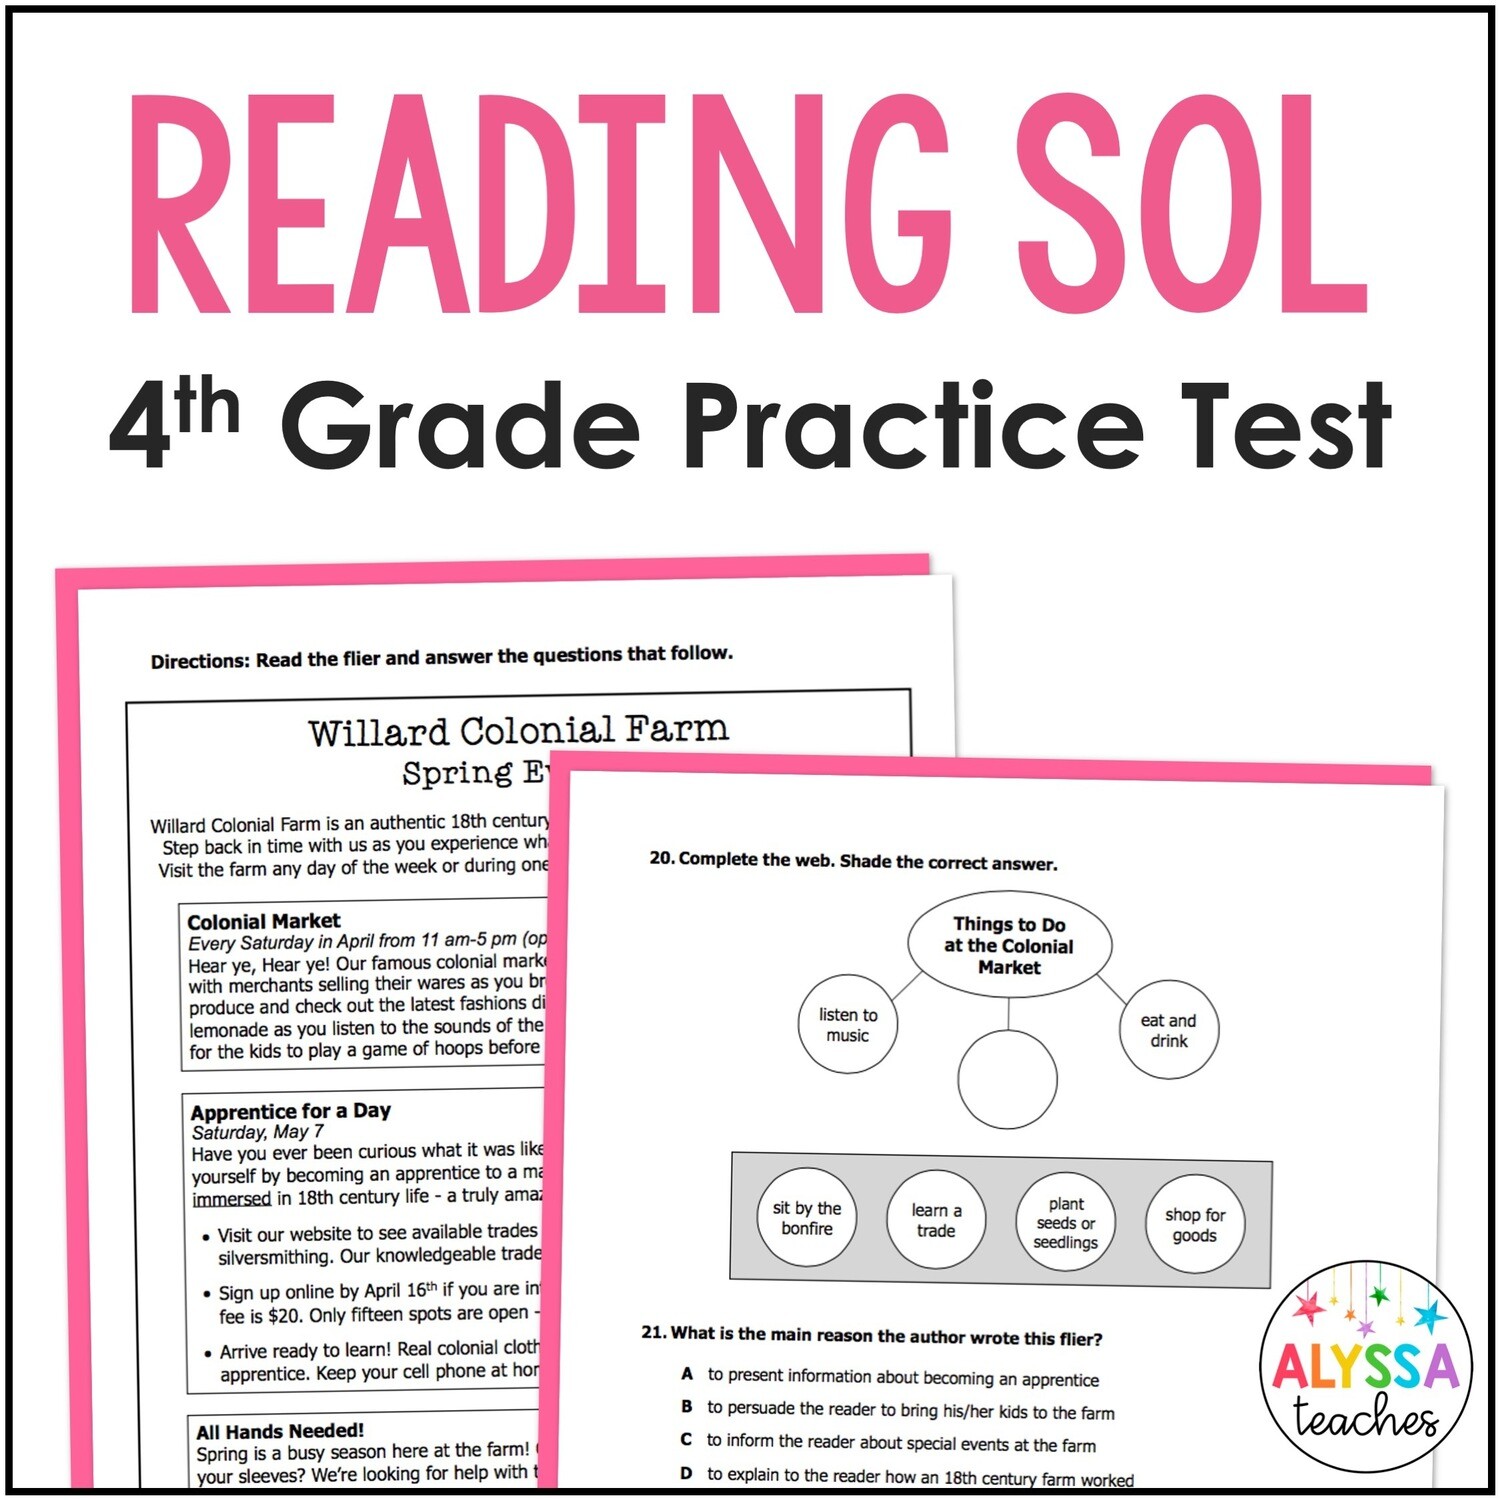 4th Grade Reading SOL Practice Test